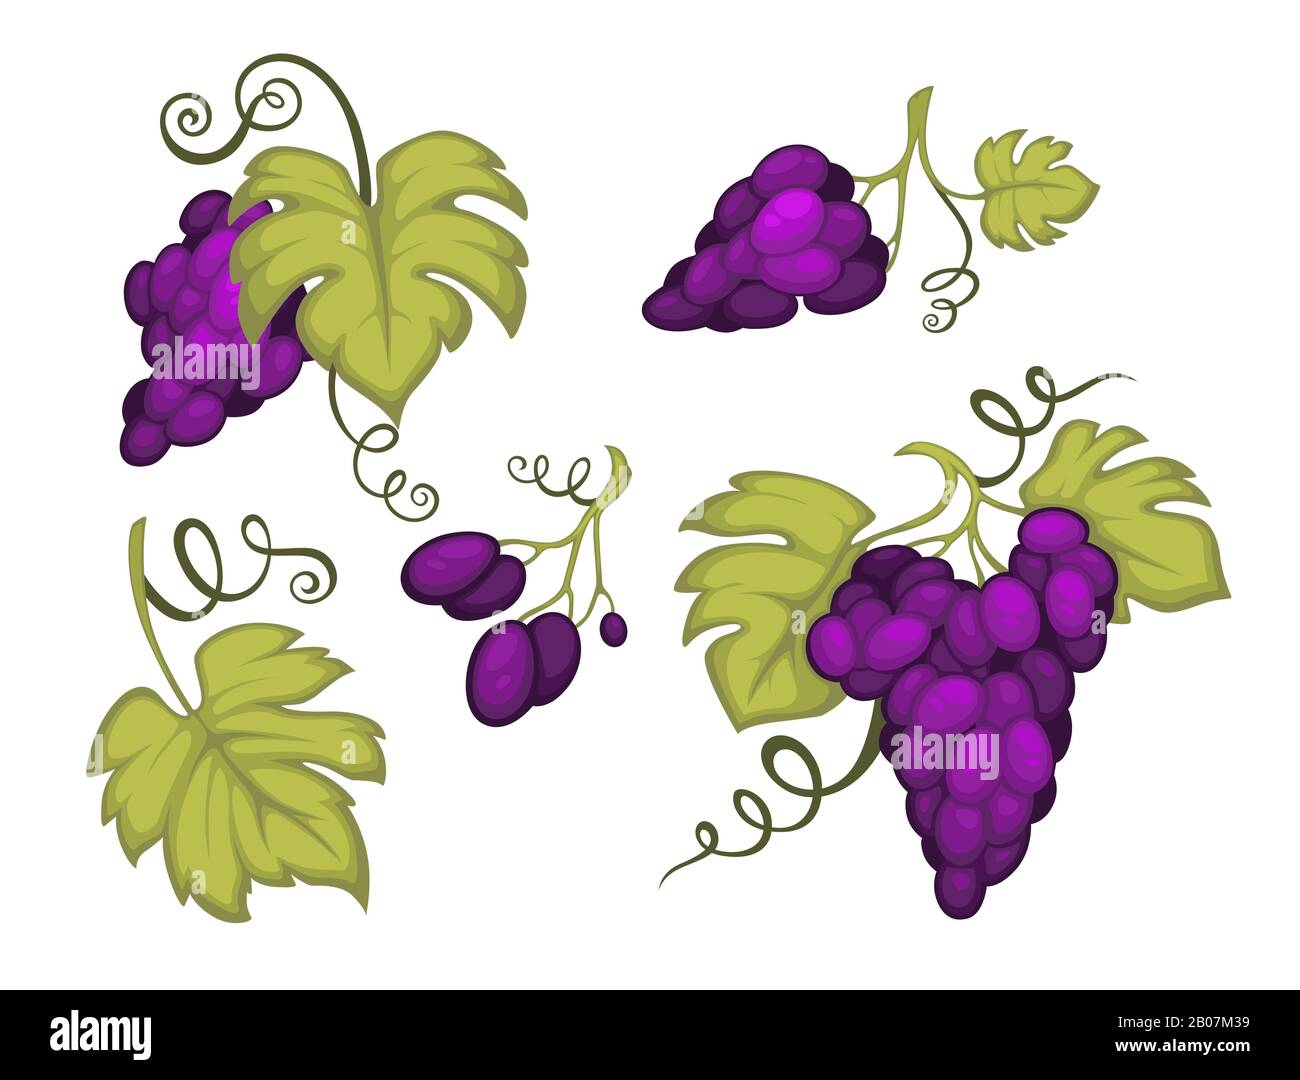 Trauben bunchen mit Blättern isolierte Ikonen, Beeren Cluster Stock Vektor